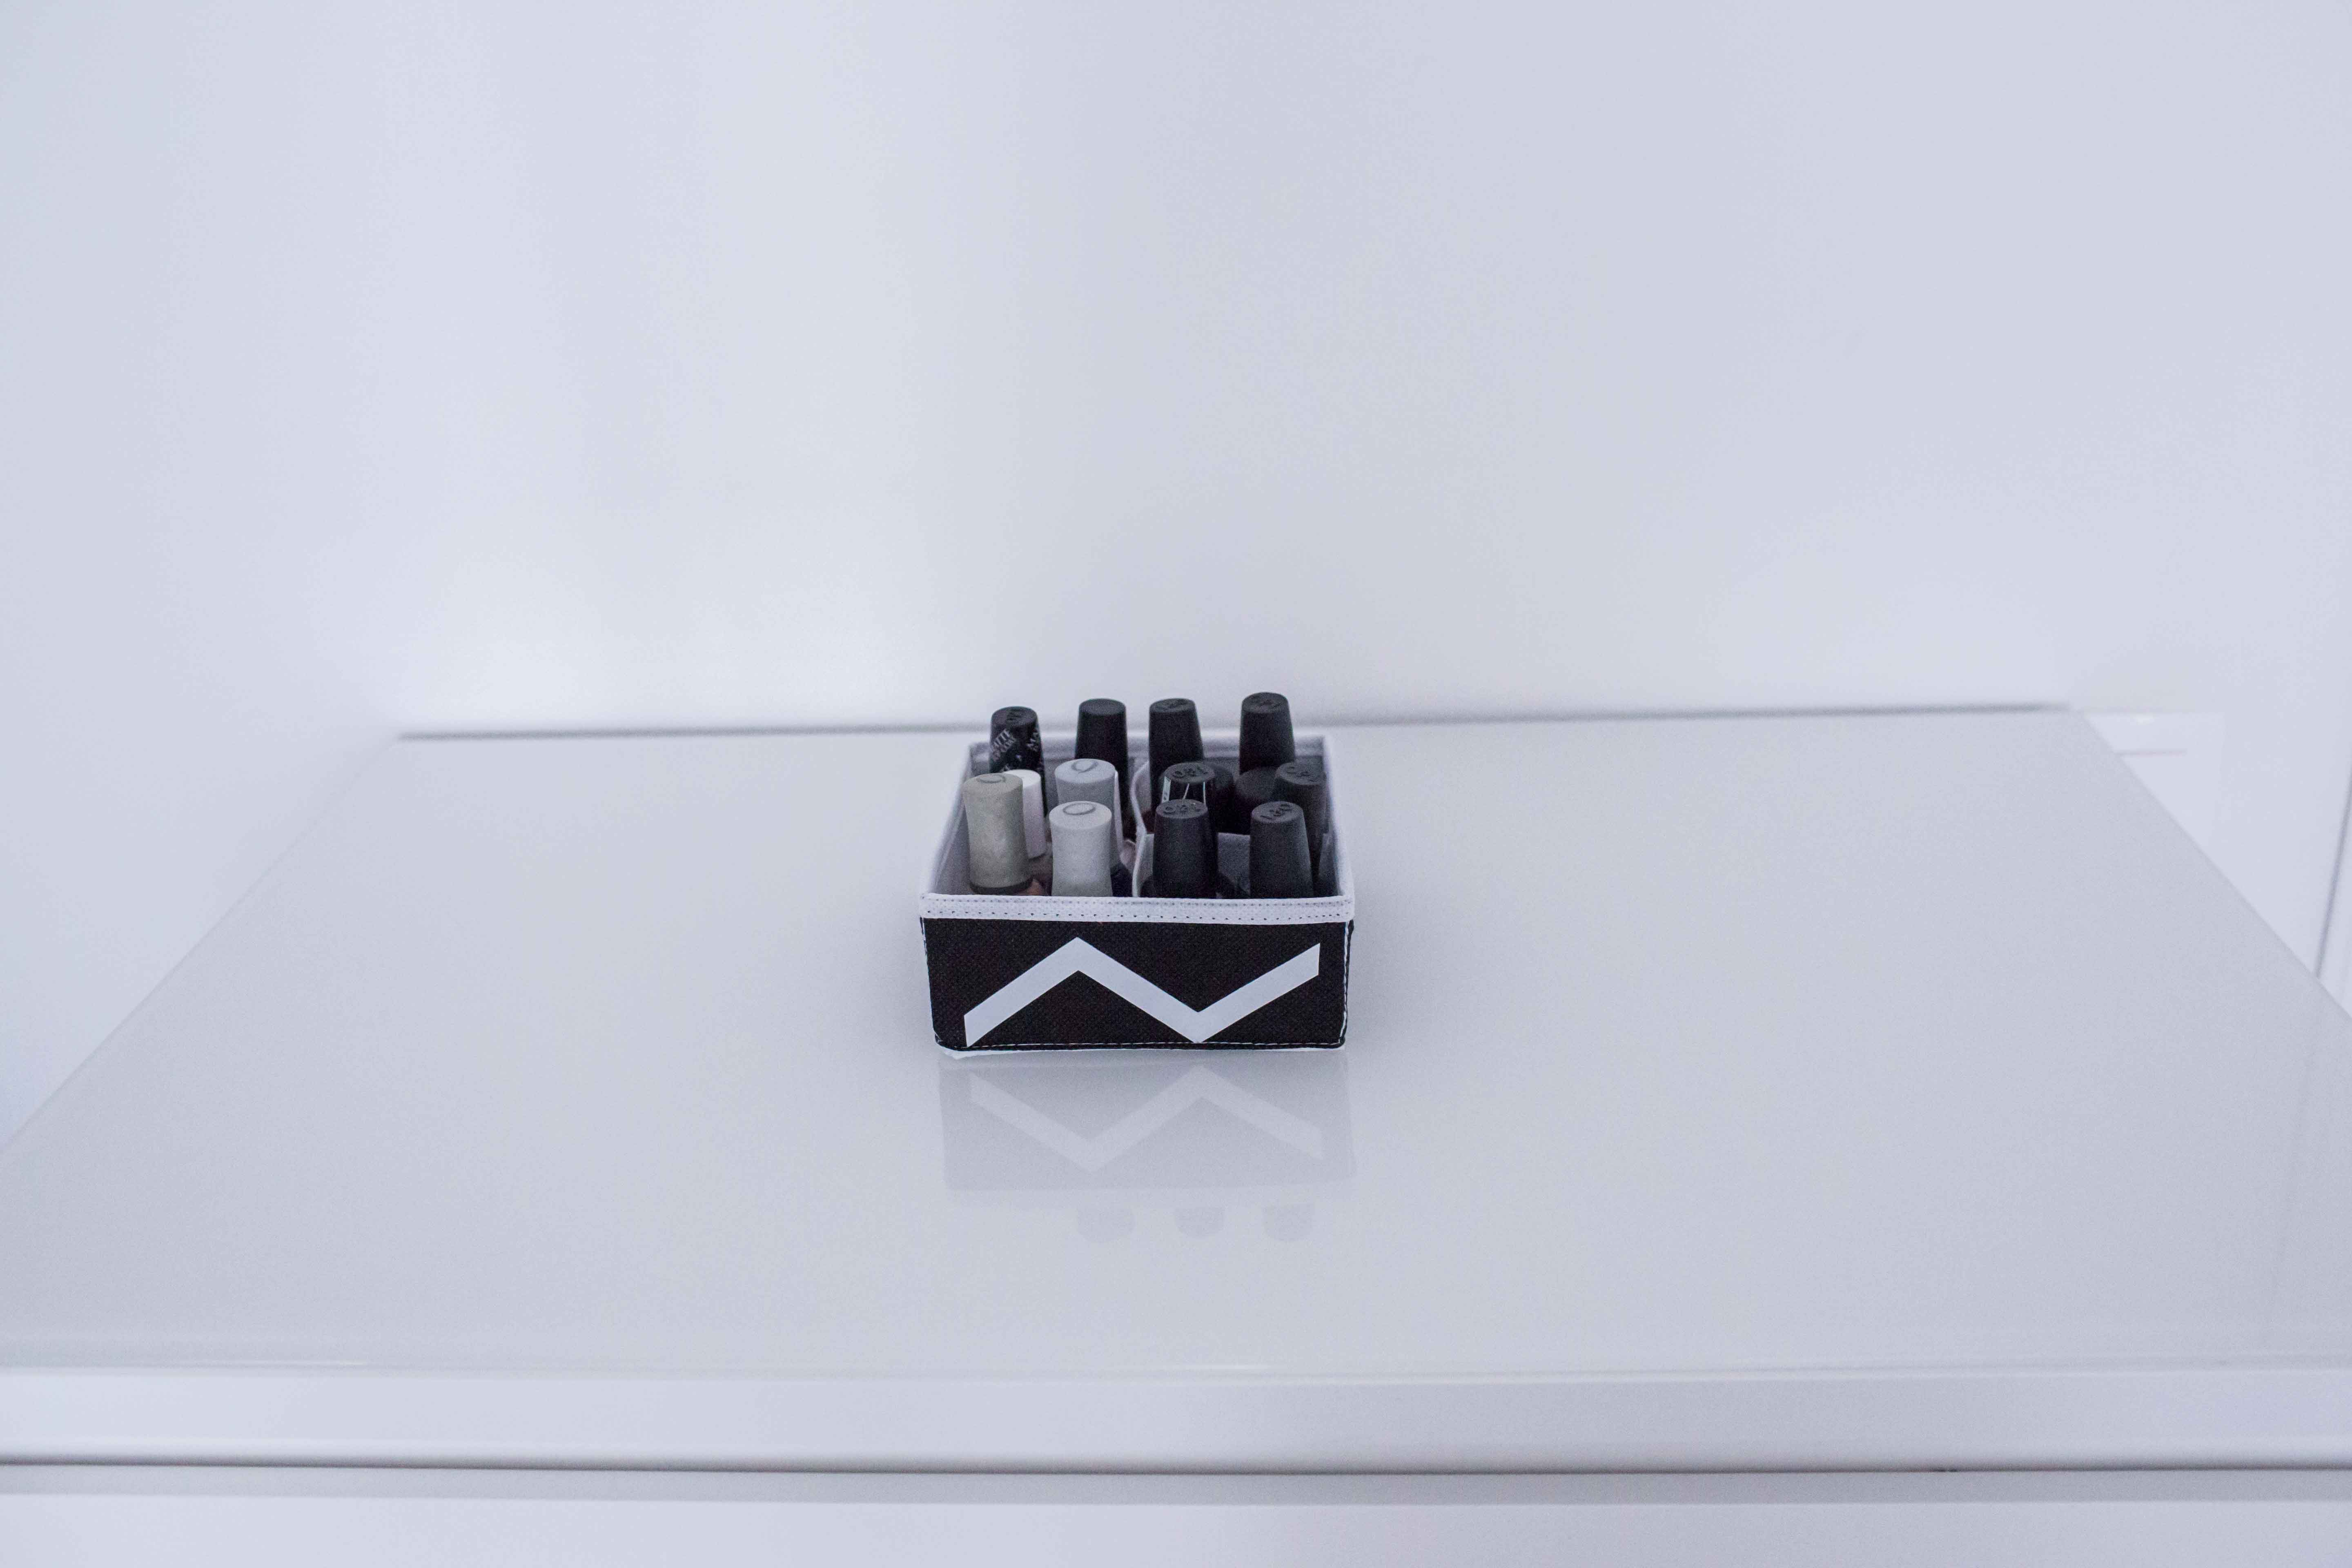 Органайзер для мелочей "Zigzag" - коробки для хранения